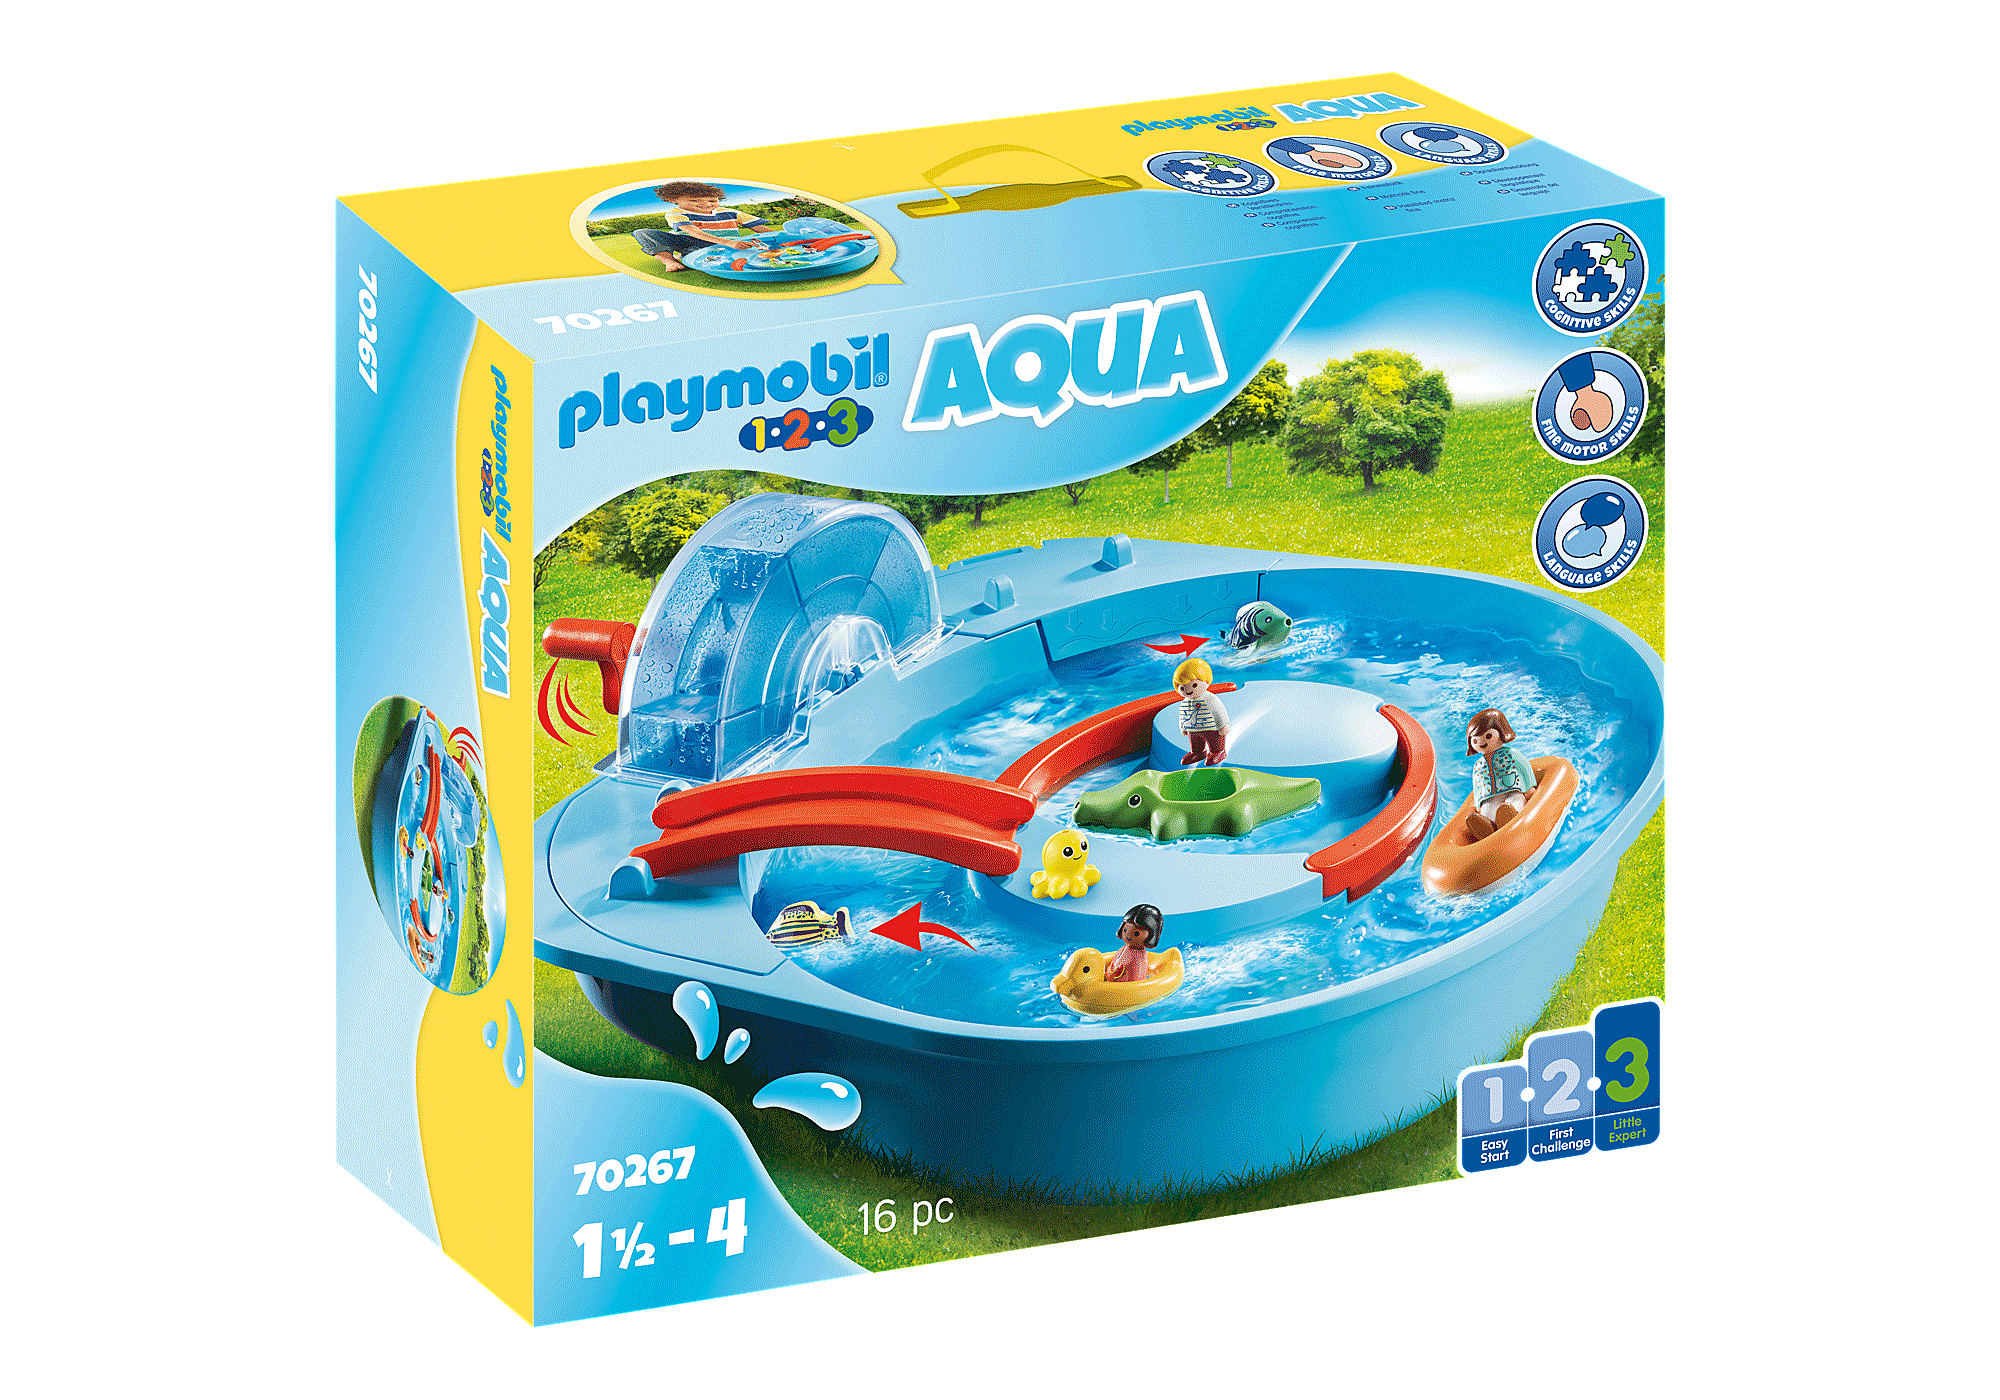 Playmobil 1.2.3 Aqua Water Slide — Bright Bean Toys